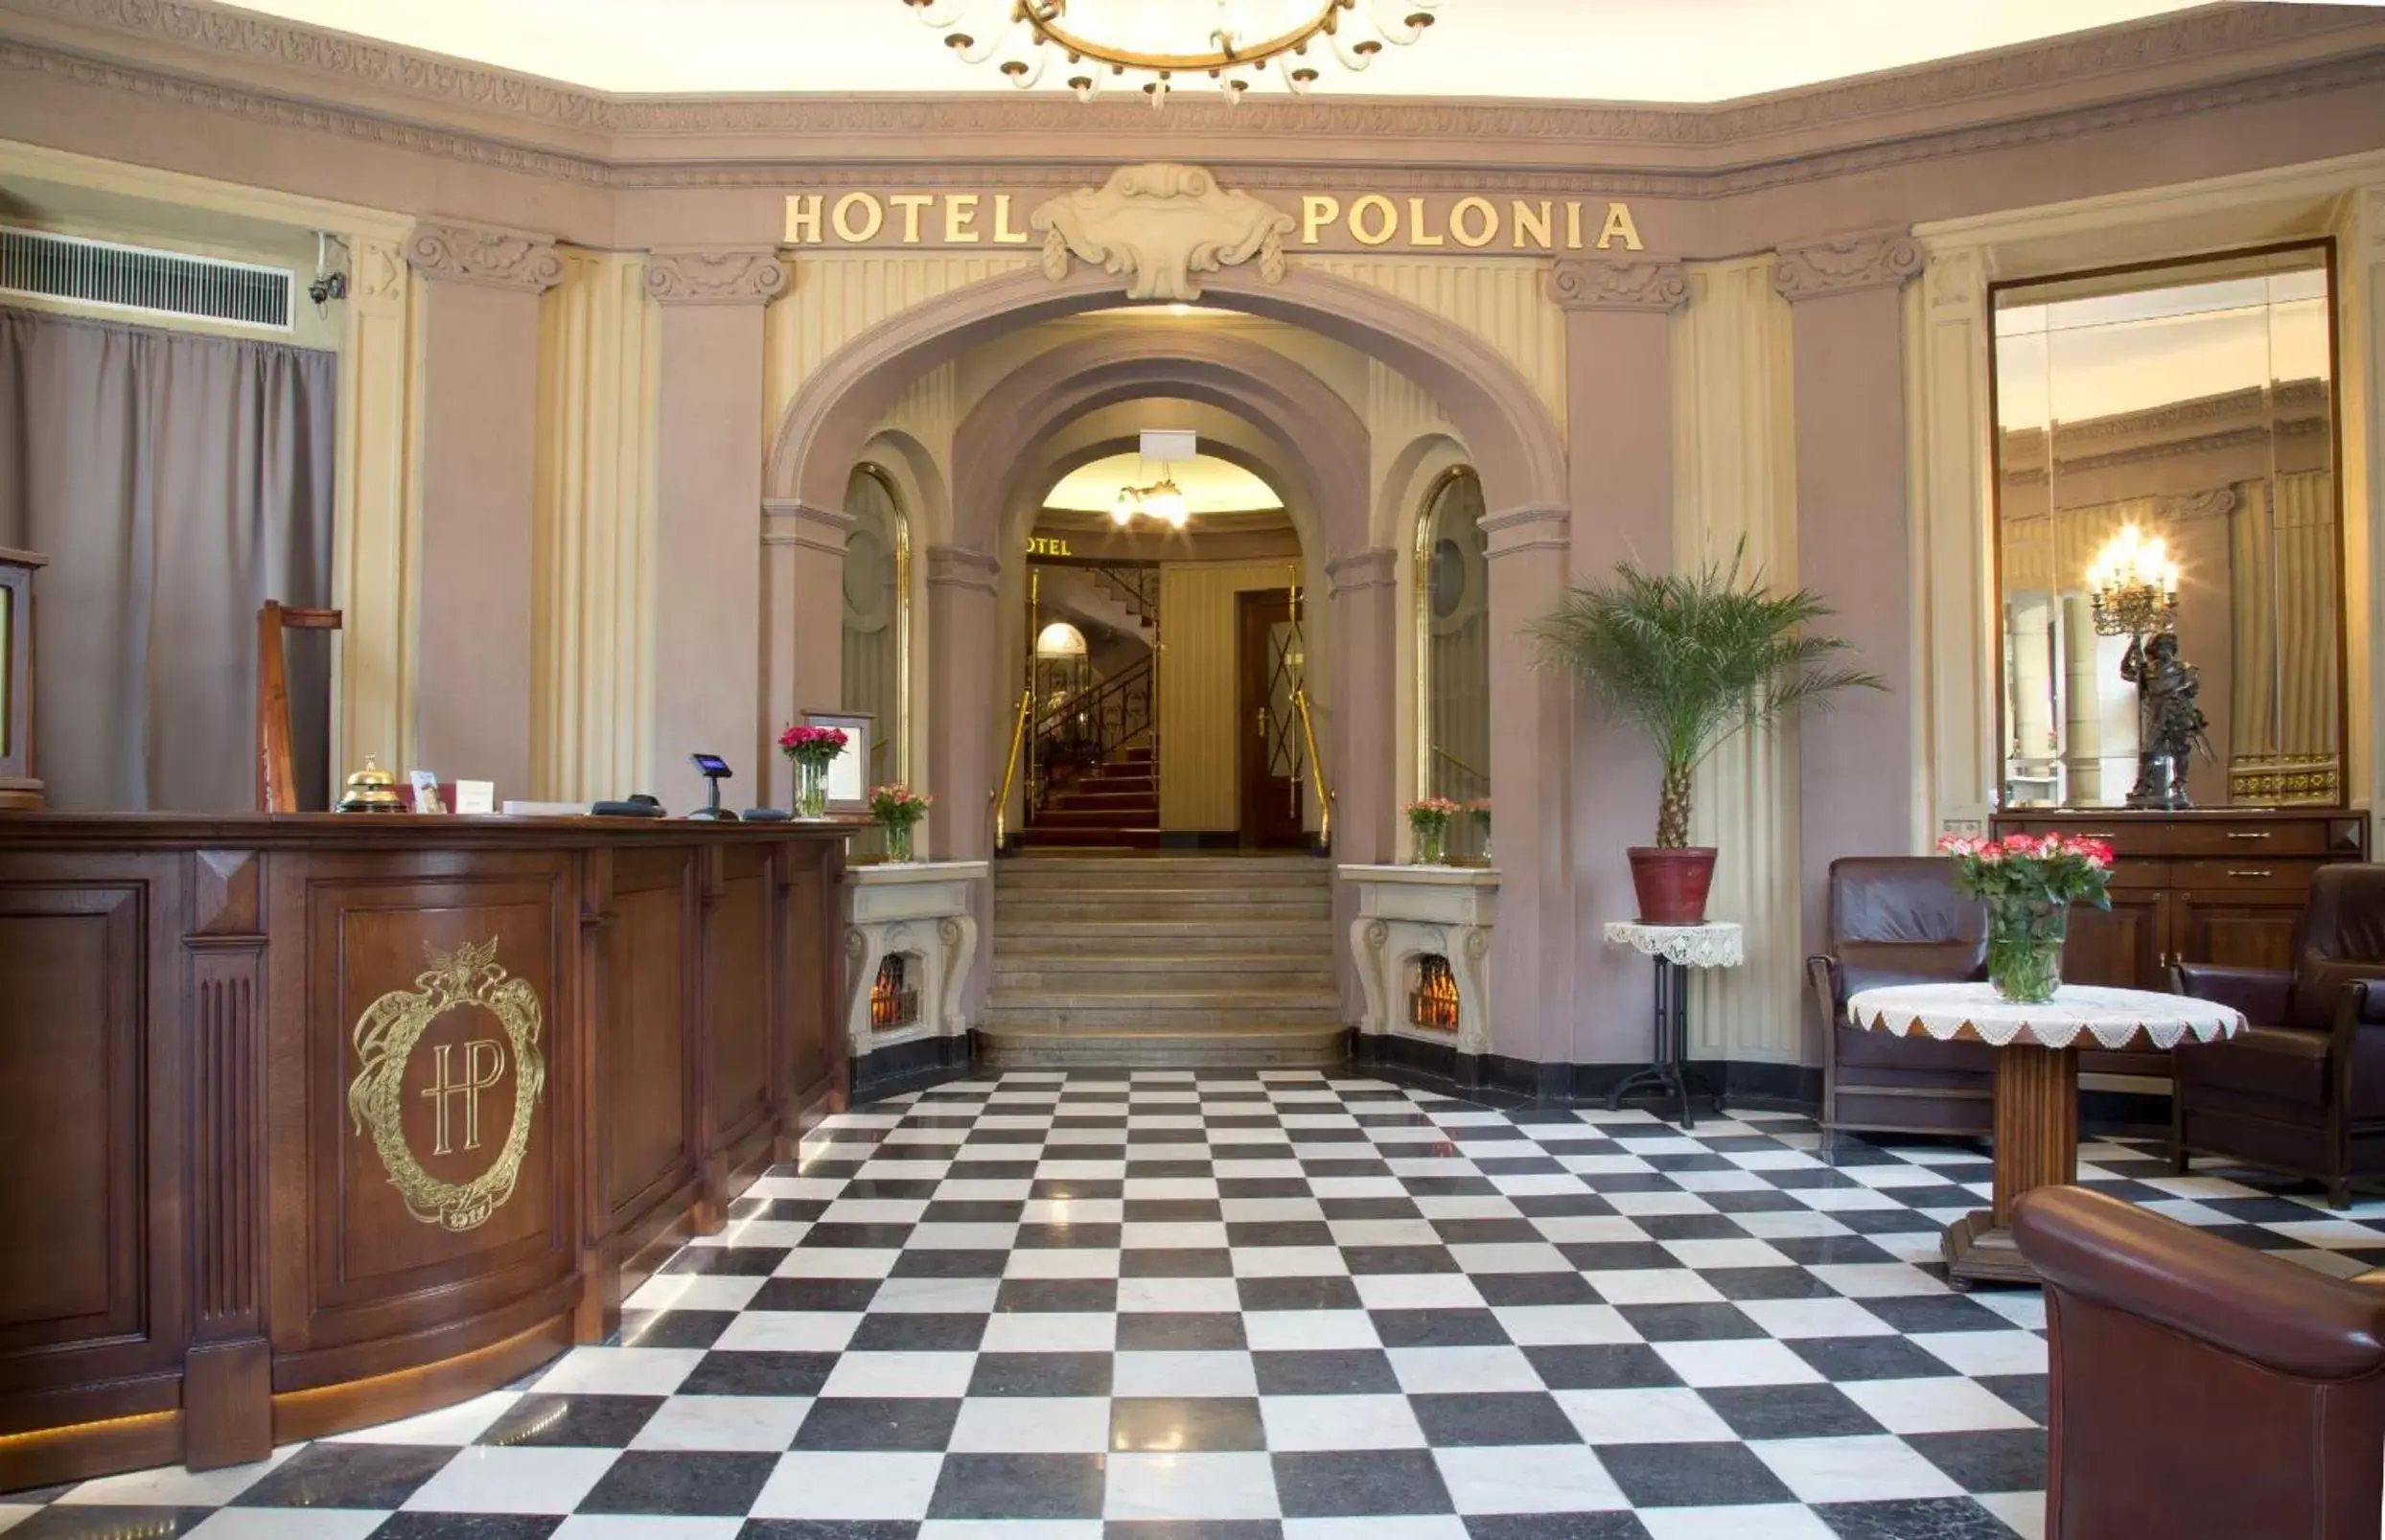 Lobby or reception in Hotel Polonia